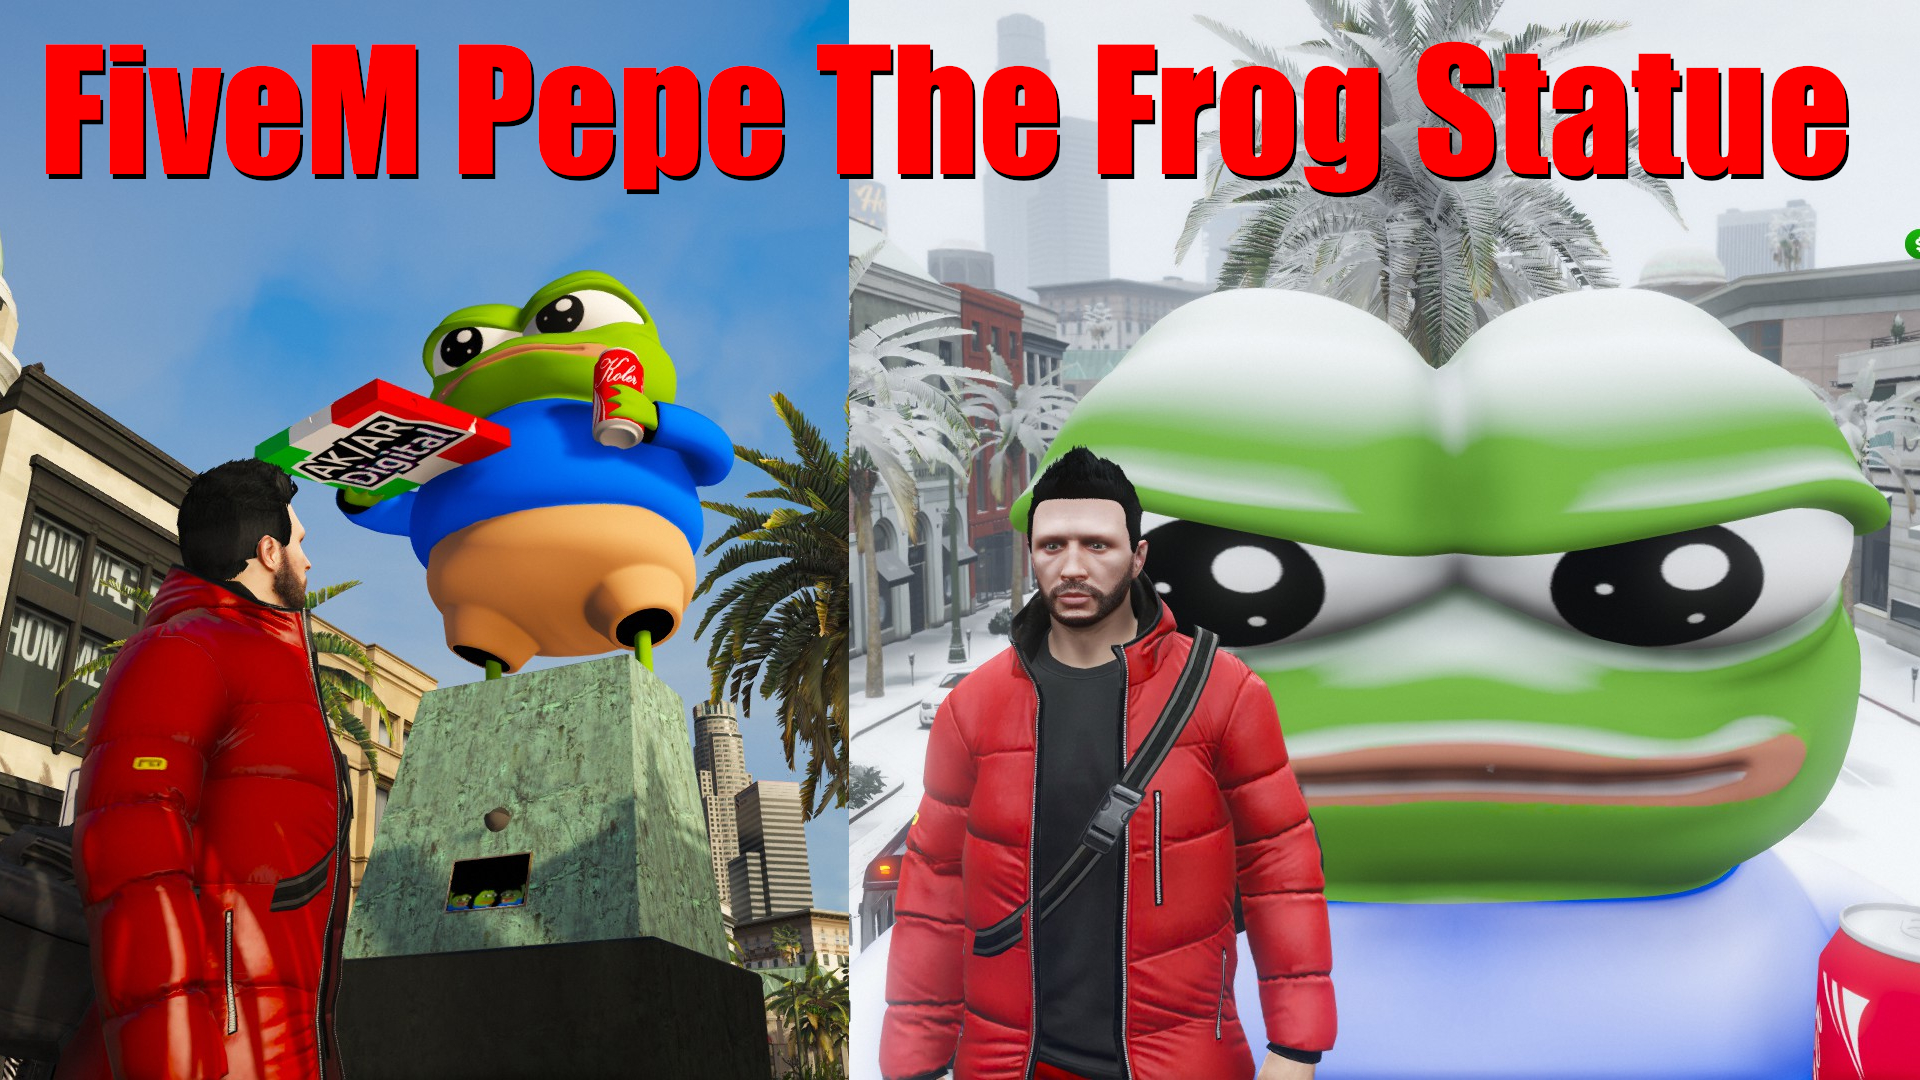 Du betrachtest gerade FiveM Pepe der Forsh Statue